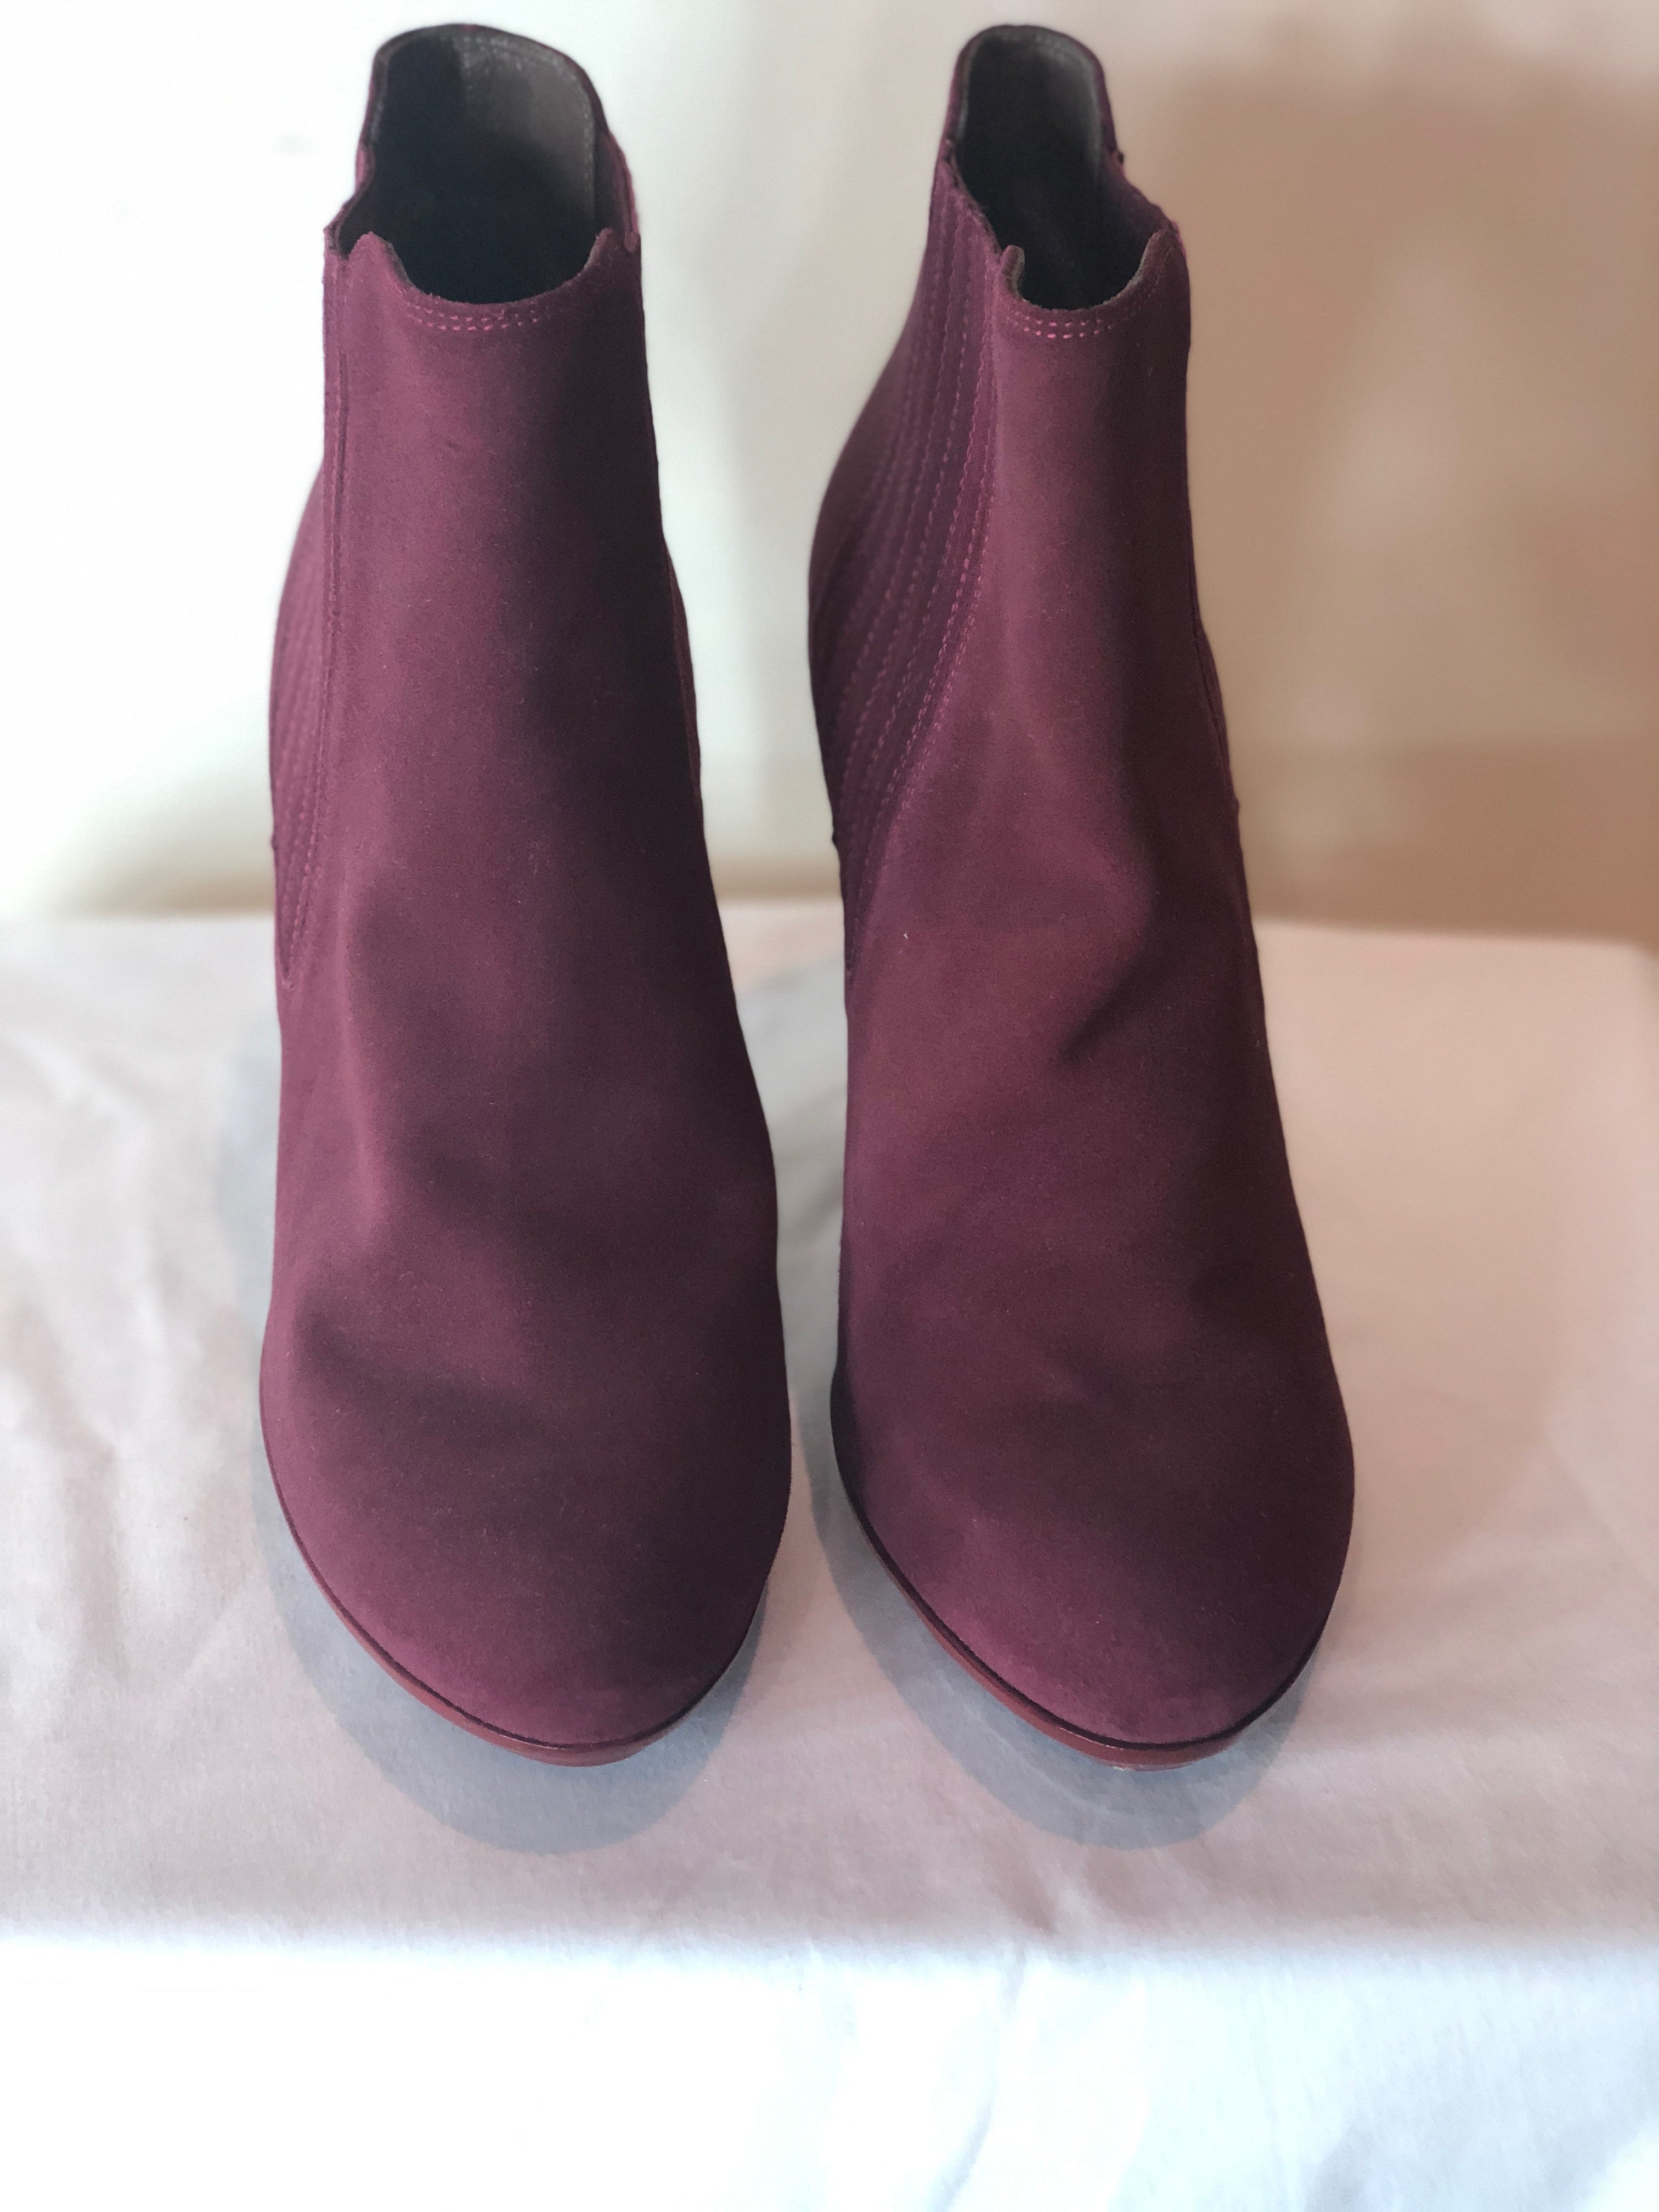 Bottega Veneta Red Suede Boots with Funky Heel